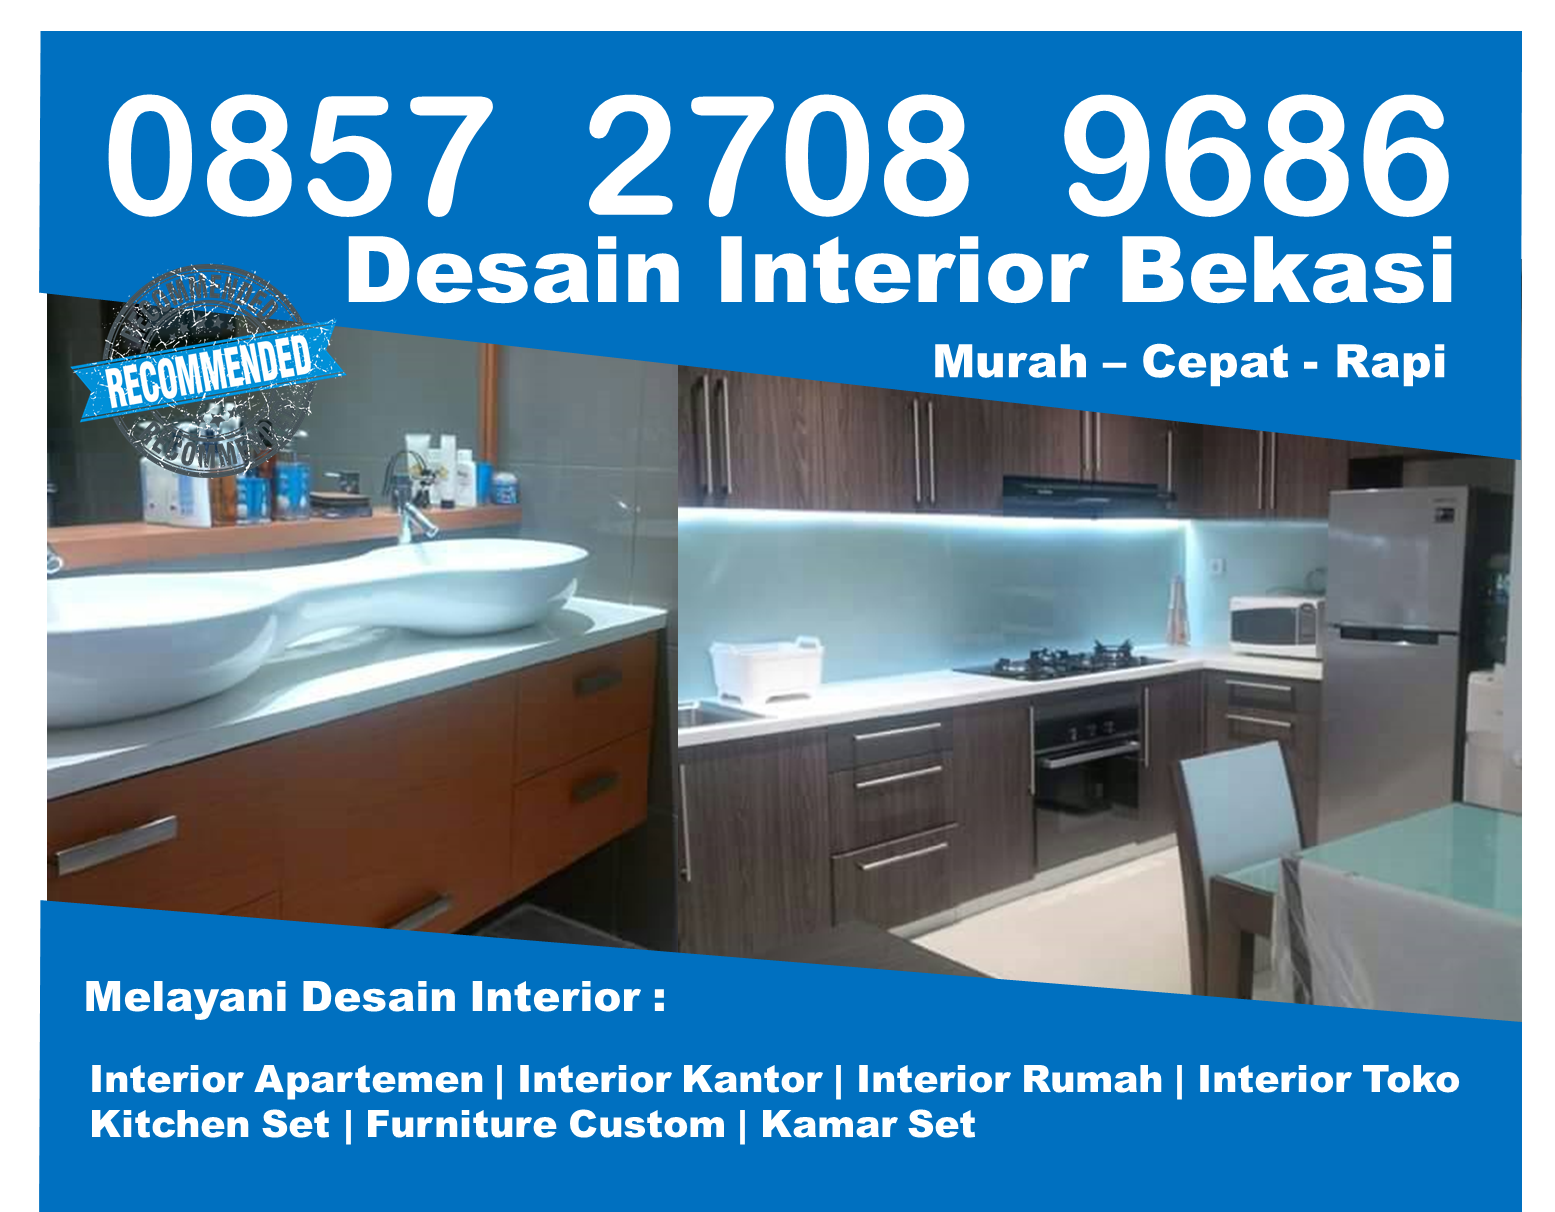 Telp 0857 2708 9686 Indosat Jasa Desain Interior Apartemen Bekasi